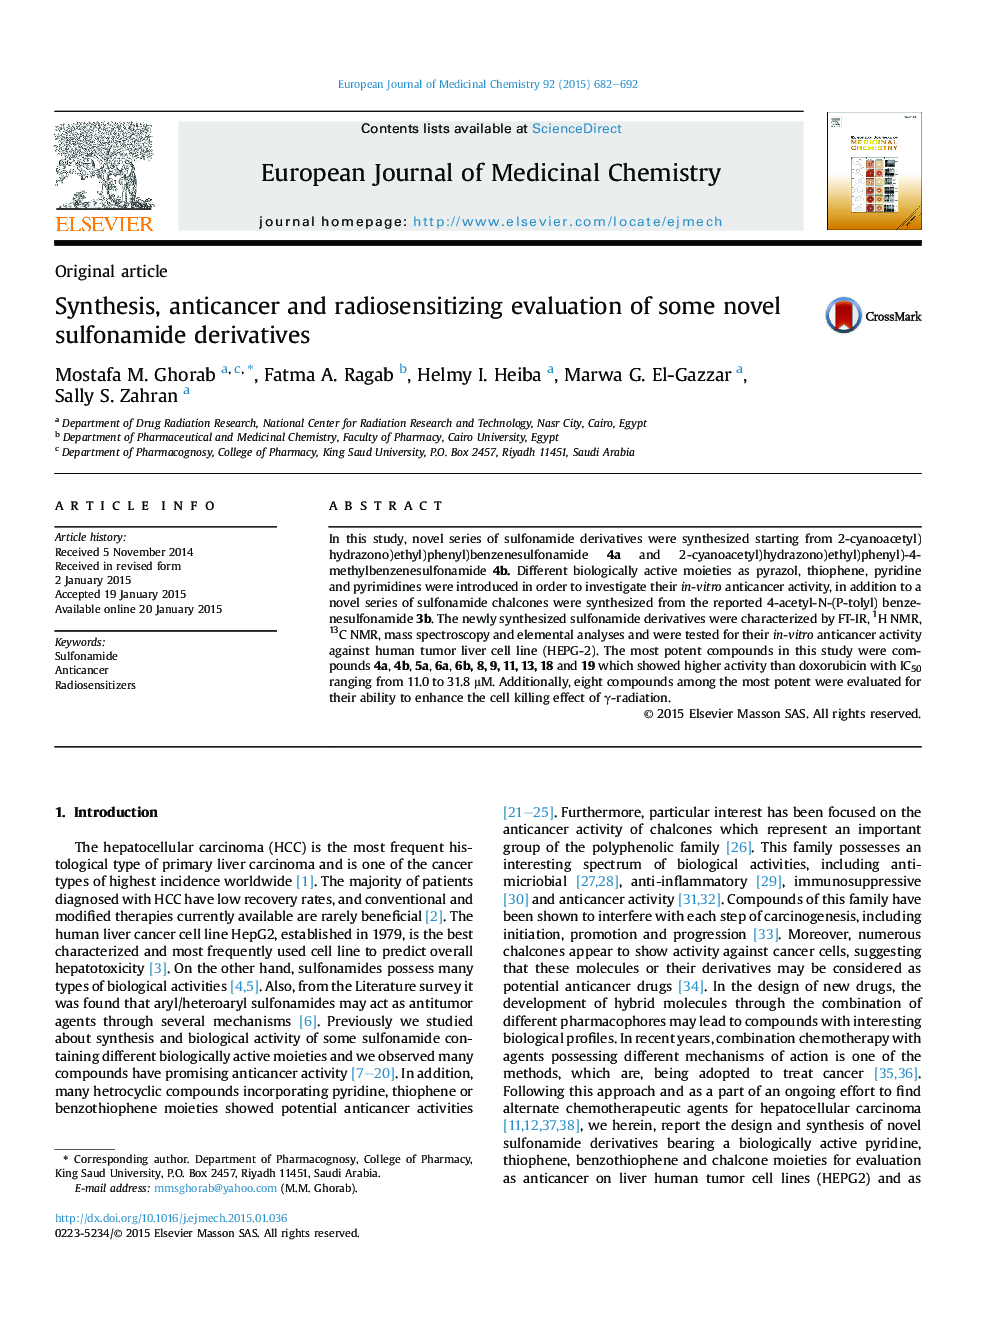 Synthesis, anticancer and radiosensitizing evaluation of some novel sulfonamide derivatives